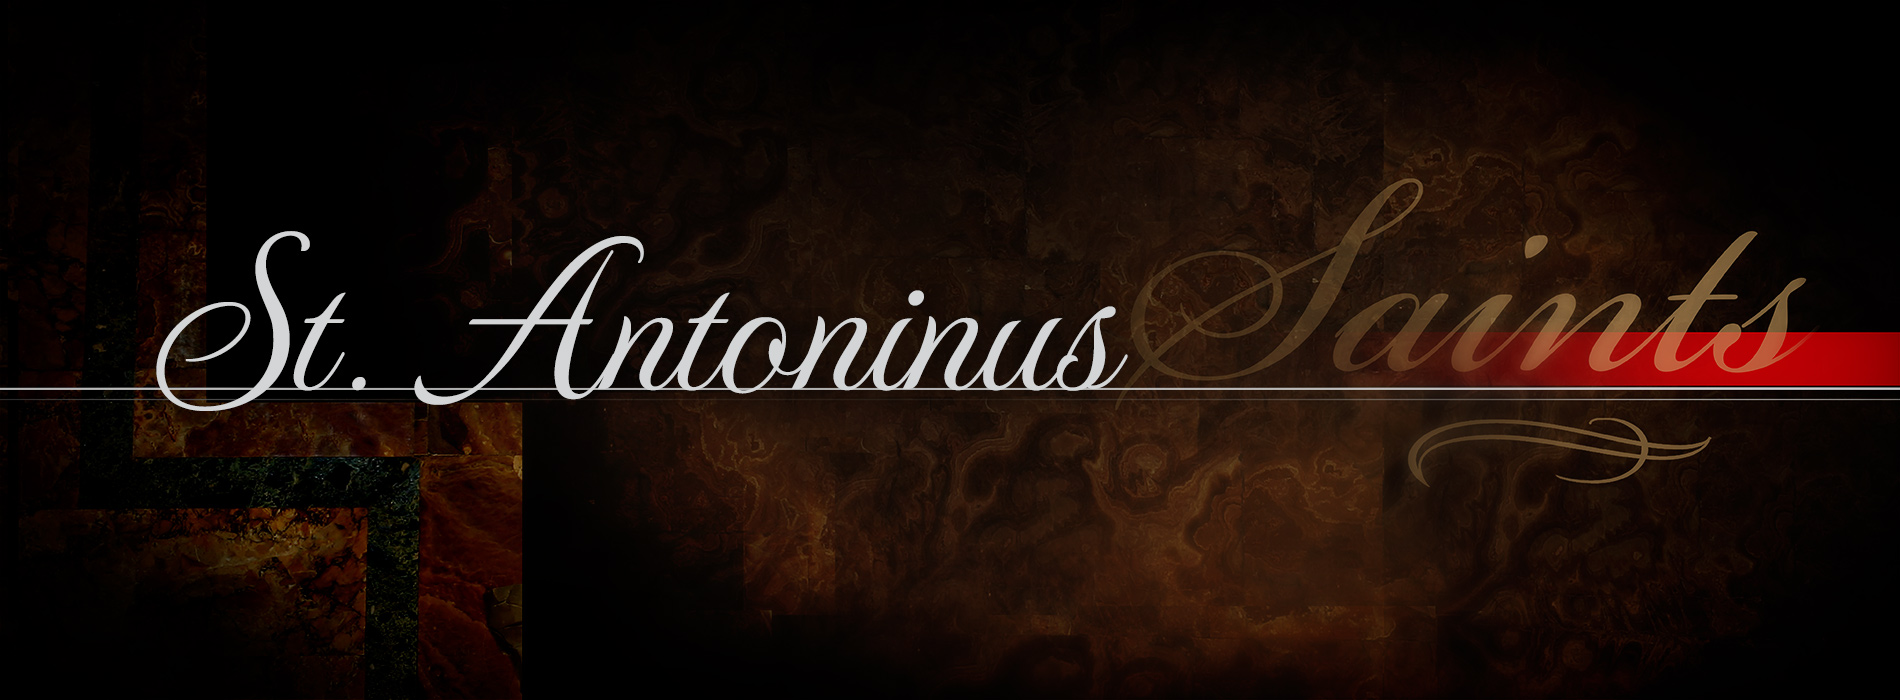 St. Antoninus